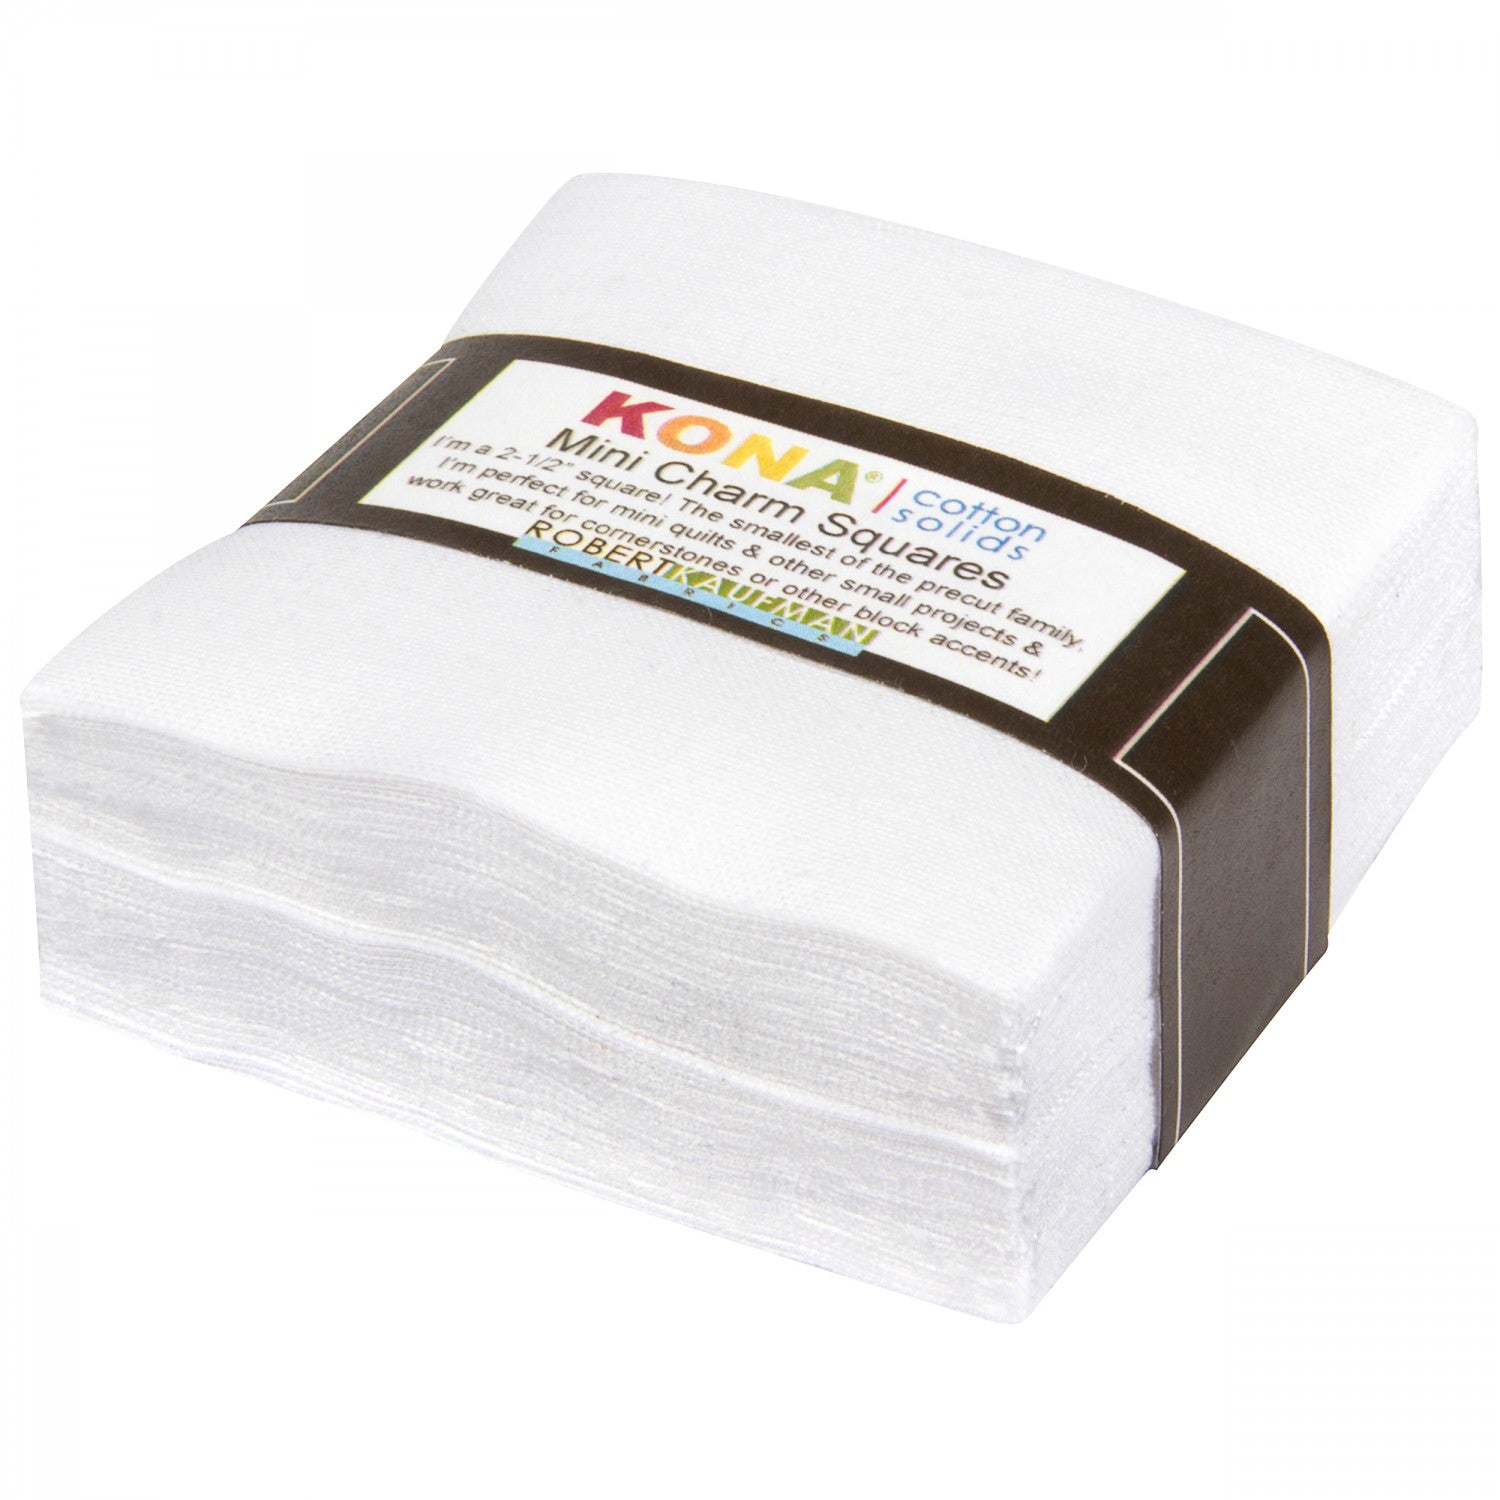 Kona Cotton Solids 2.5-inch Charm Squares - White (84pcs)